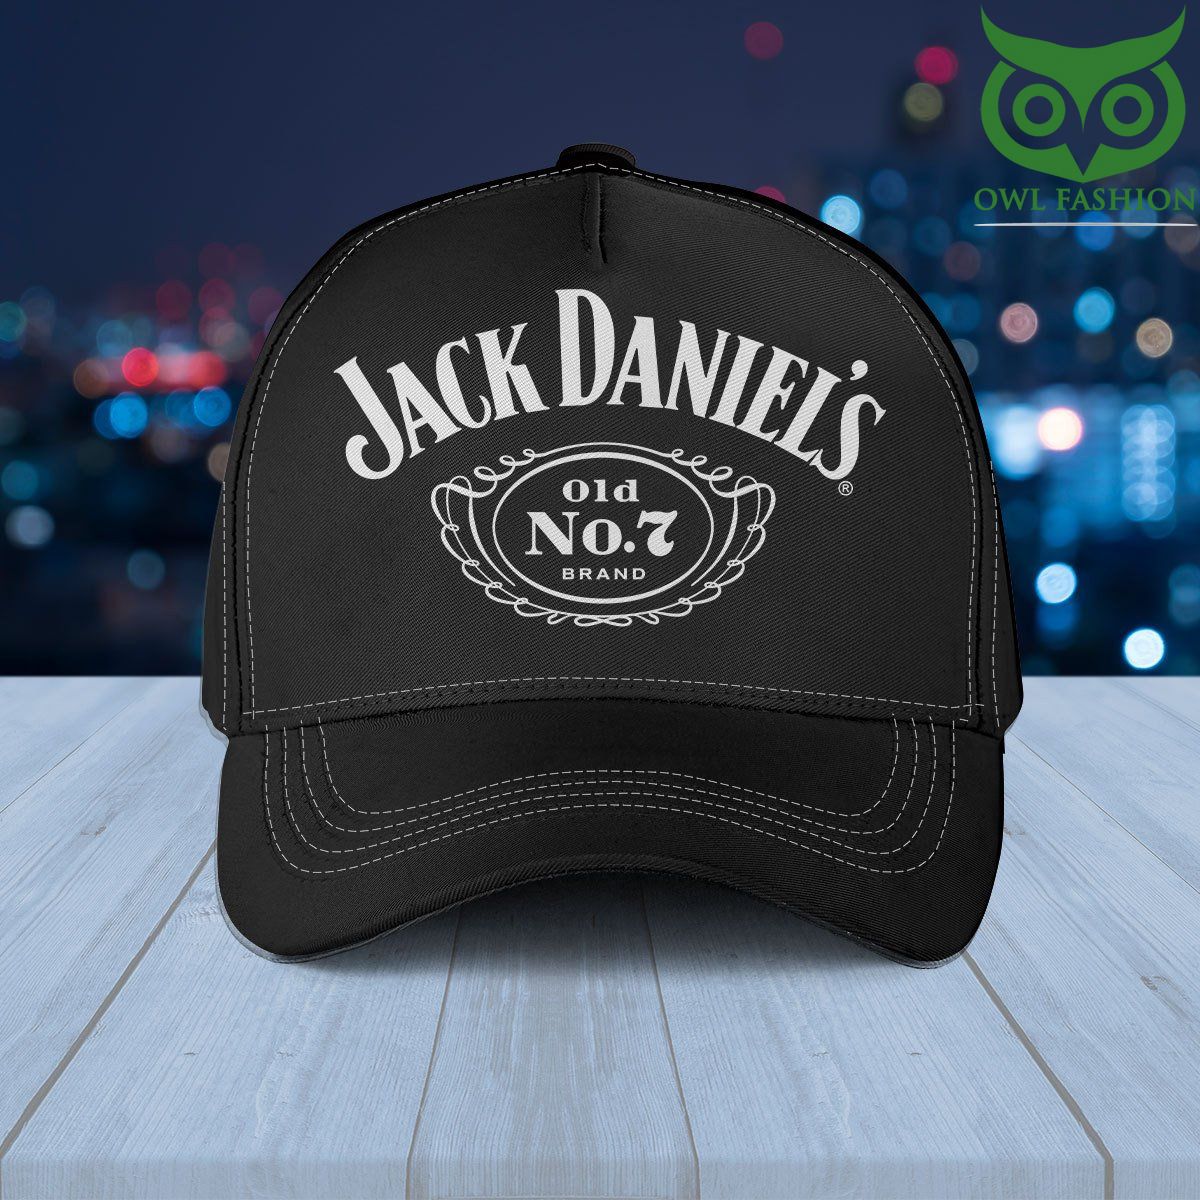 Jack Daniel's Old No 7 brand Baseball Cap 